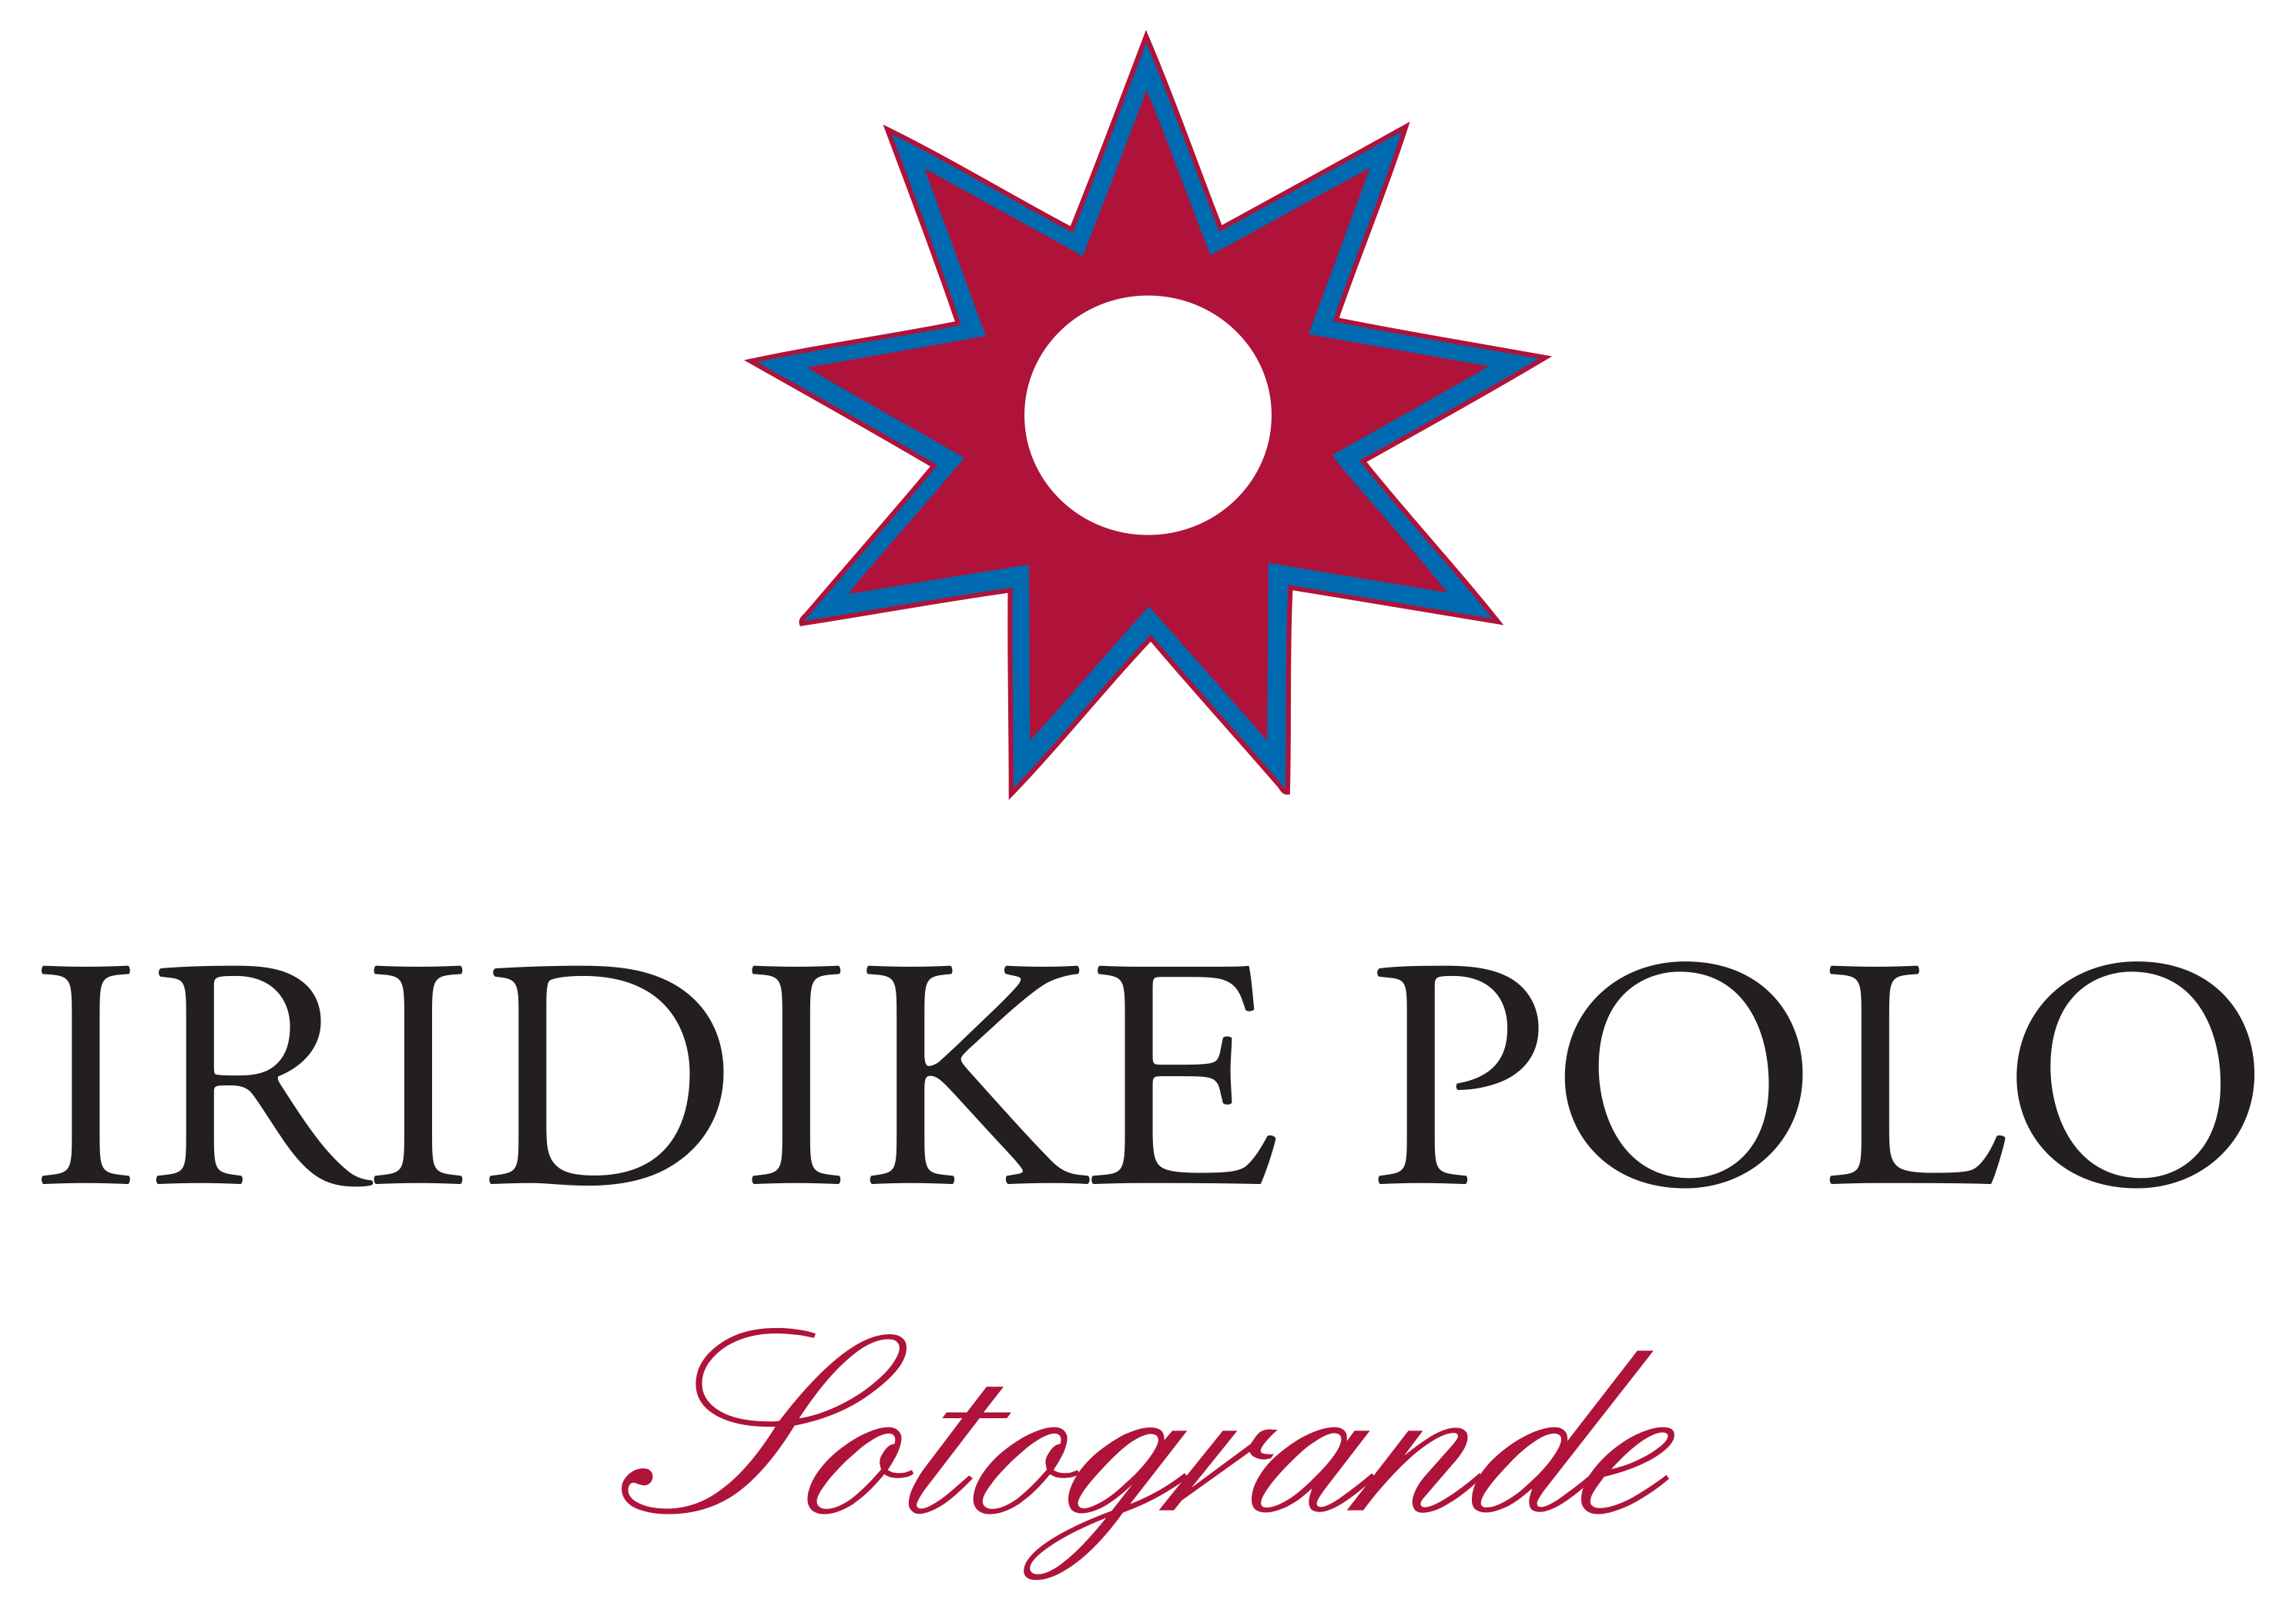 Conoce Nuestra Historia | Iridike Polo Club Sotogrande